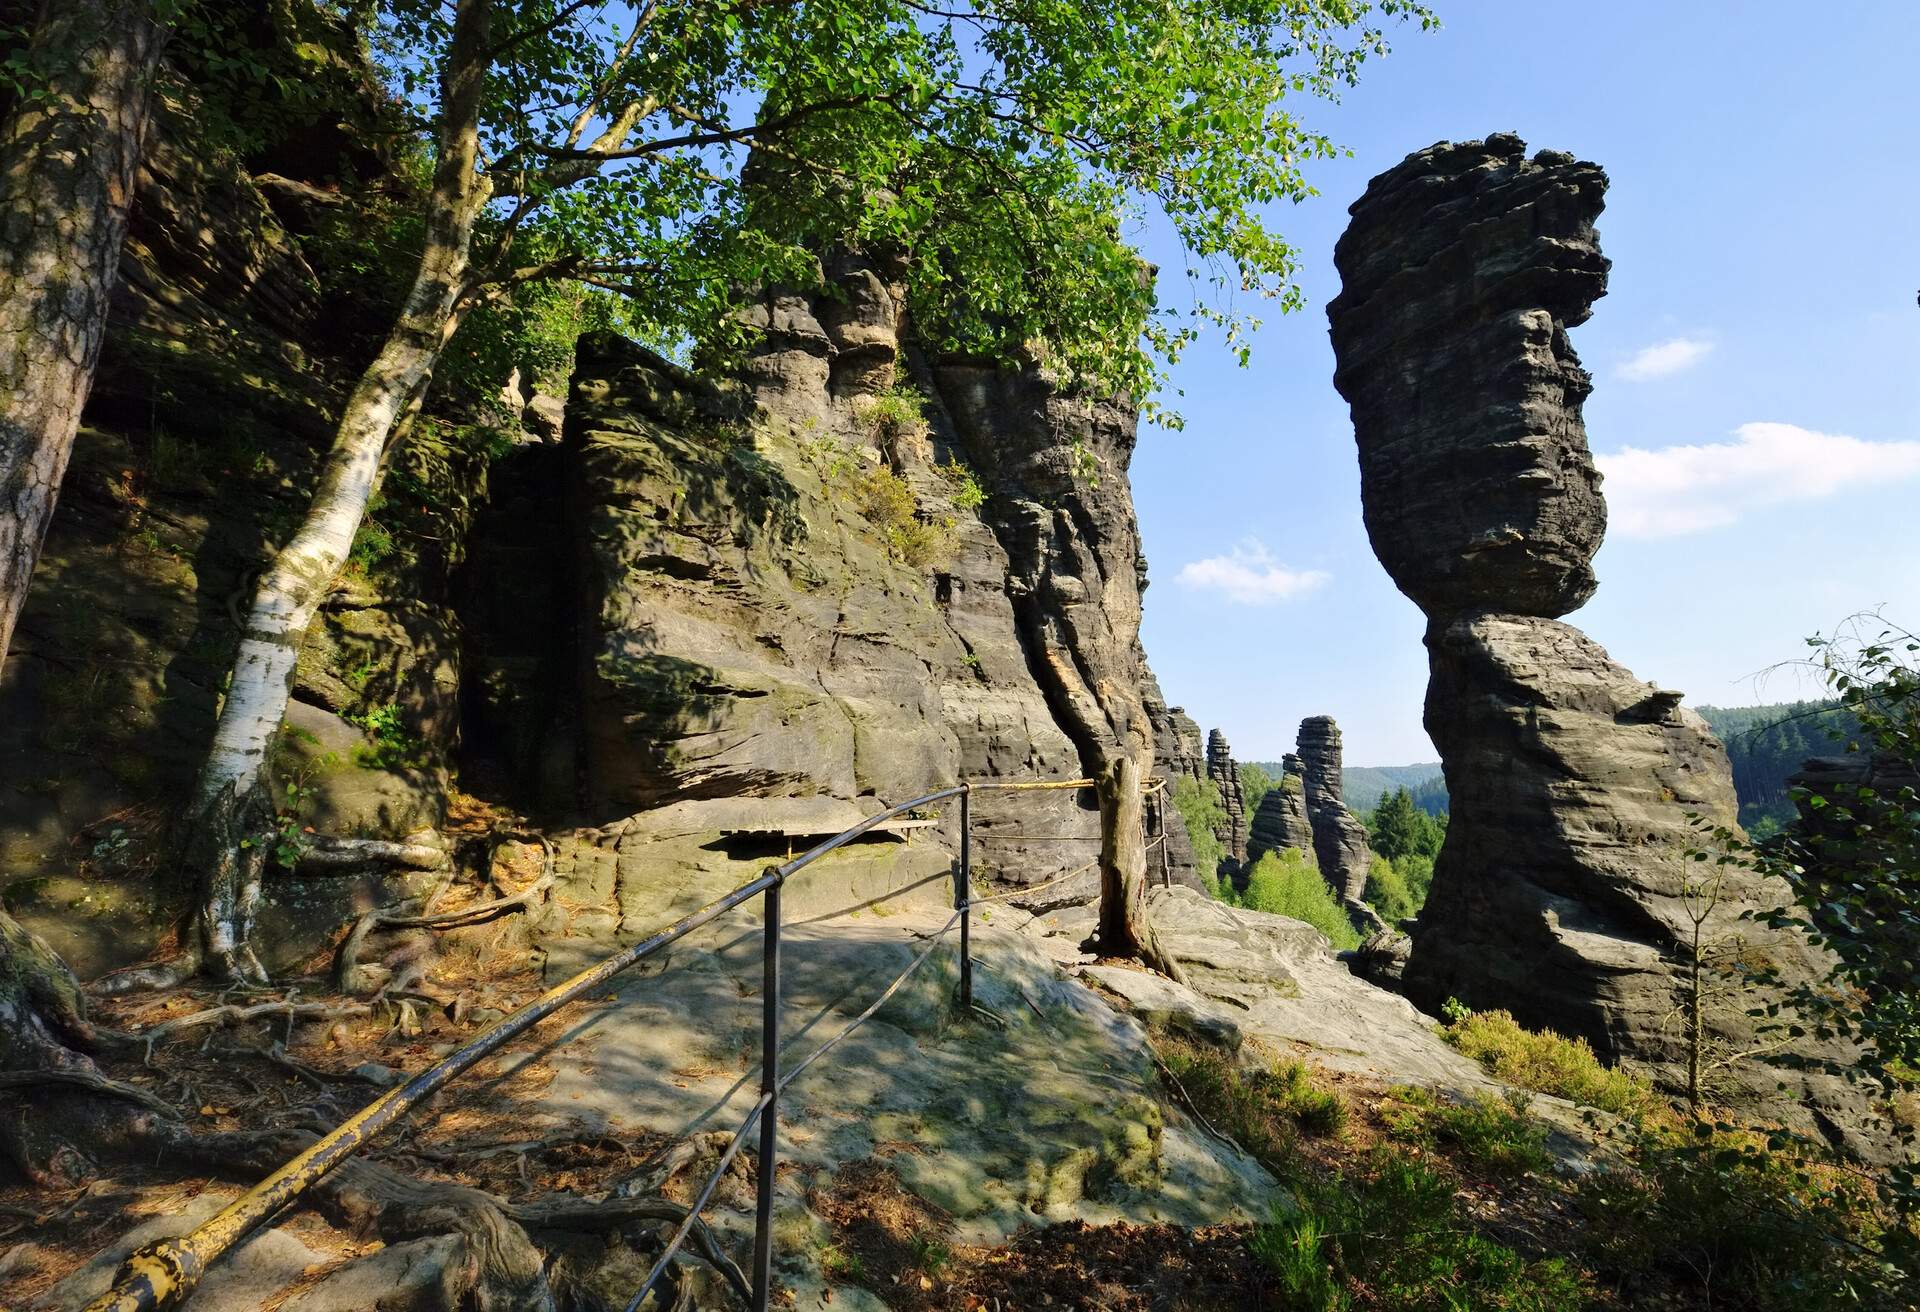 hercules columns in Saxon Switzerland